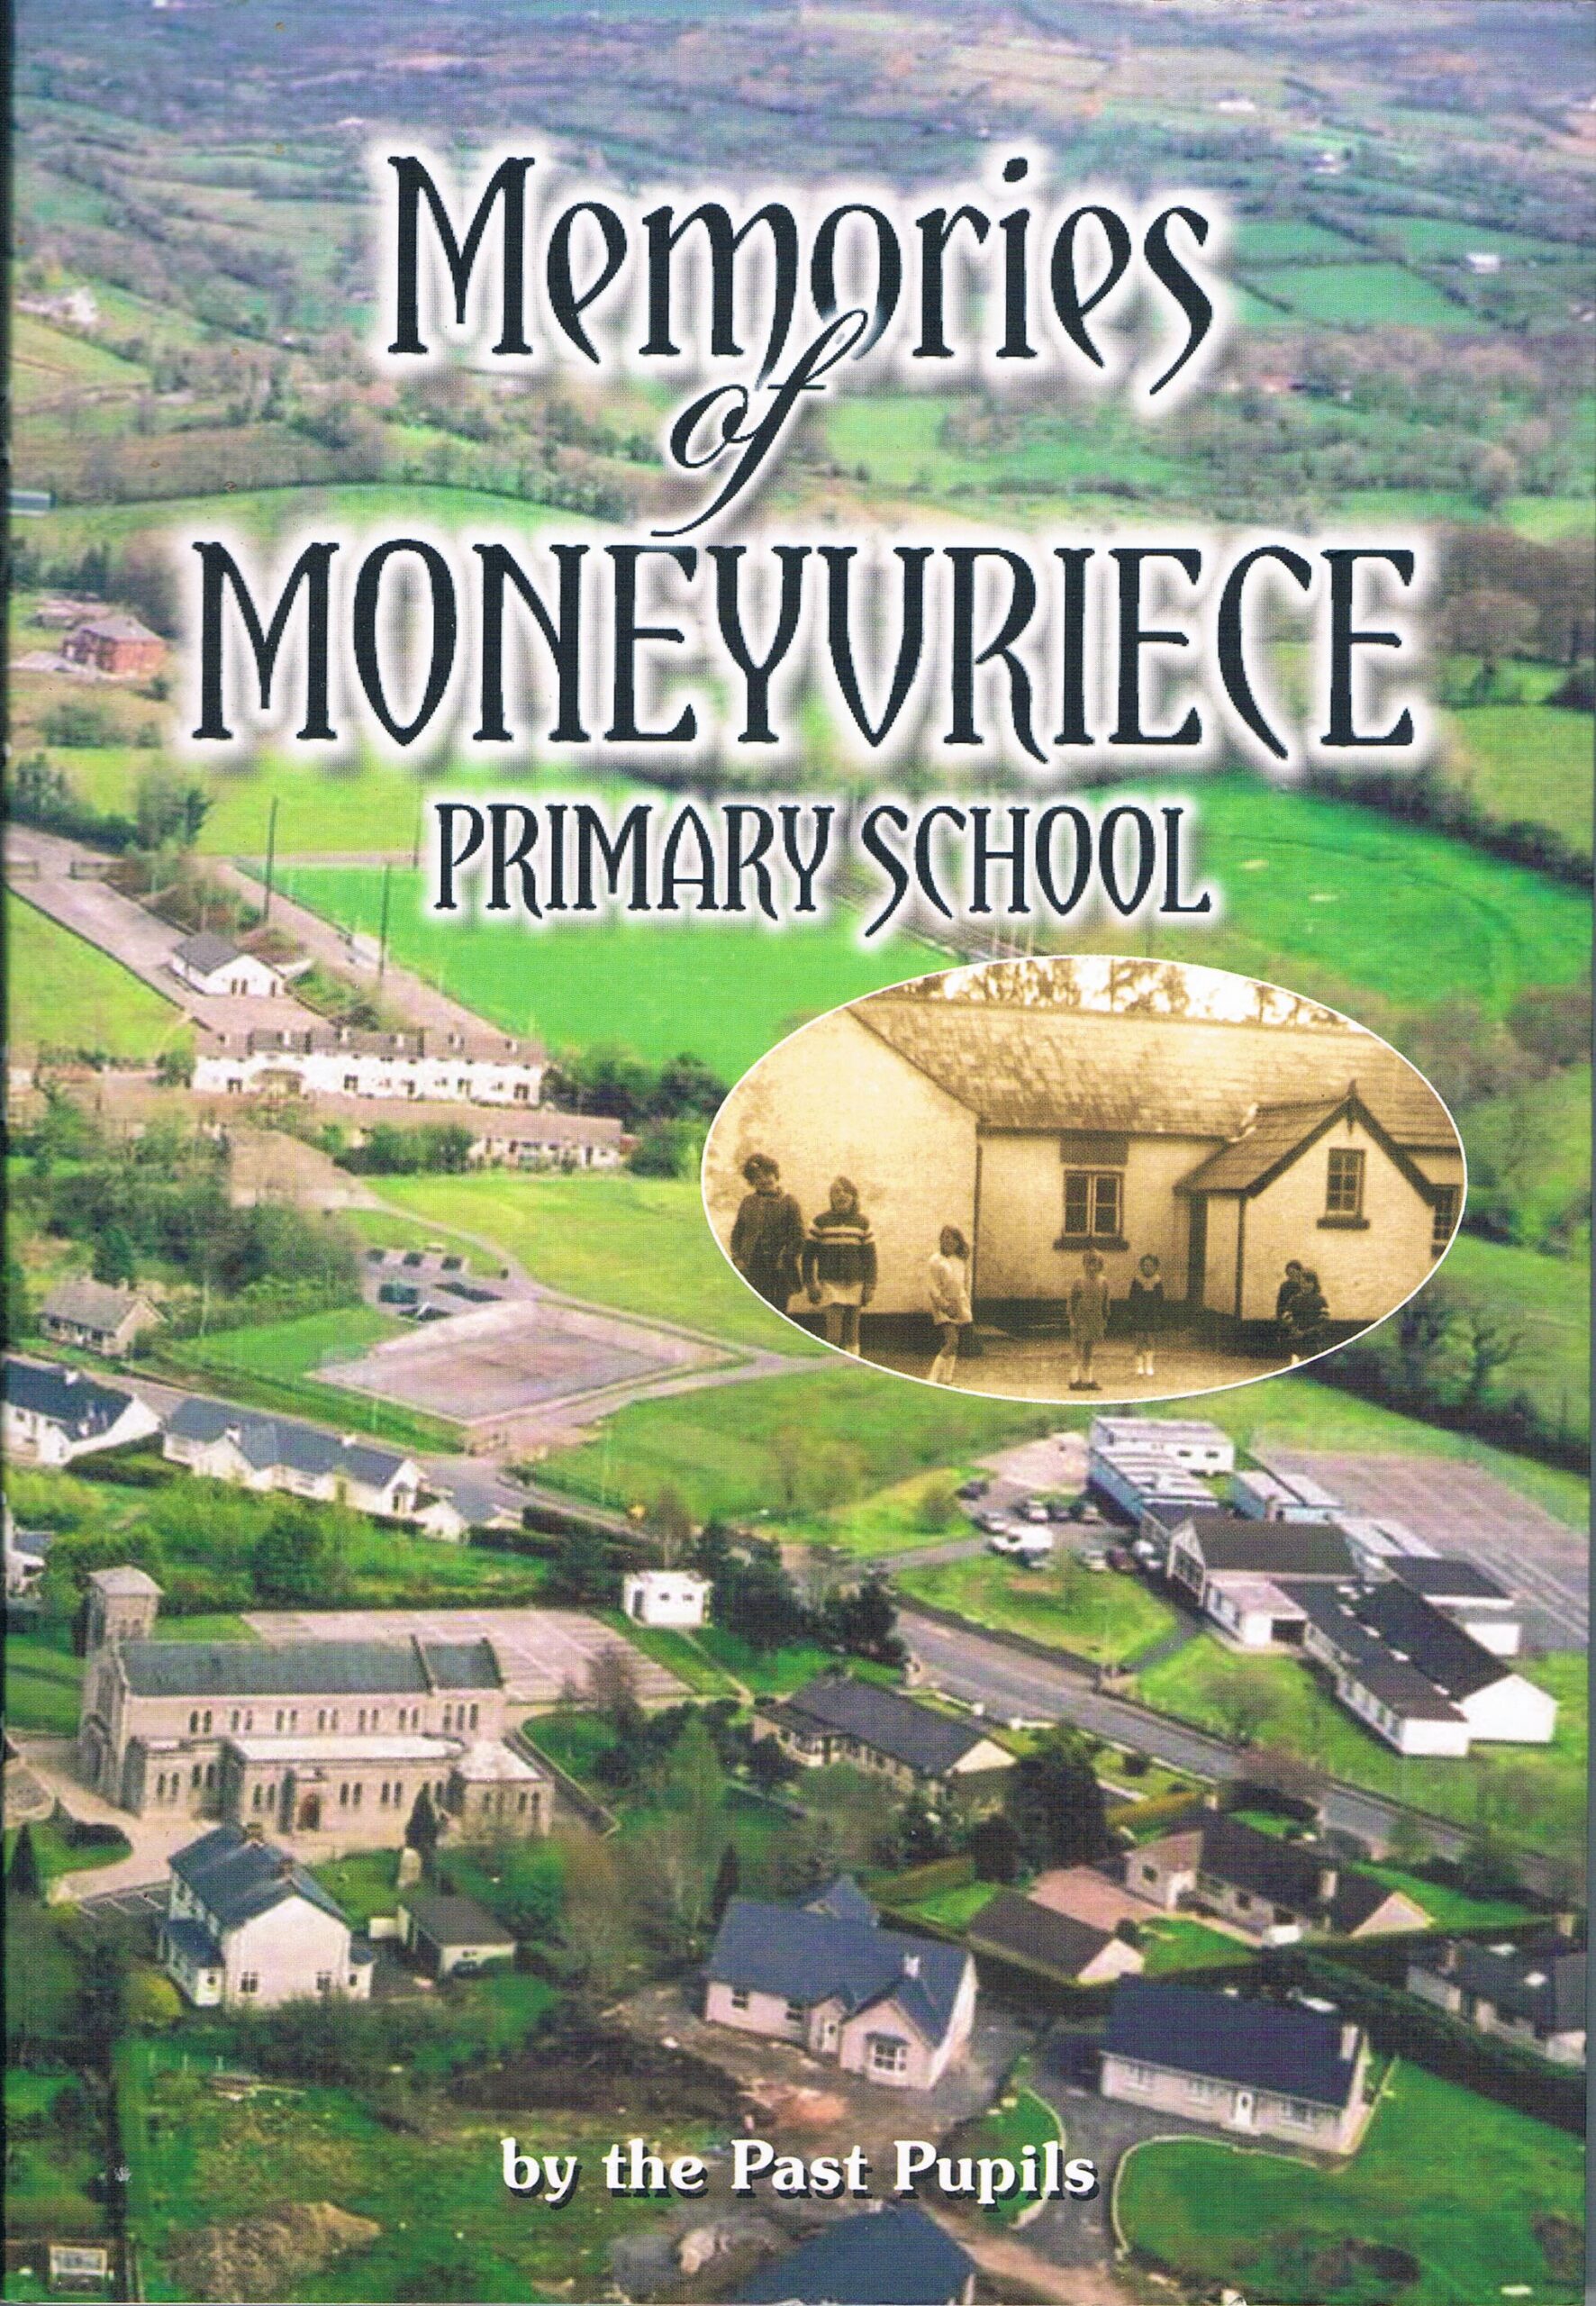 Memories of Moneyvriece Primary School | Joseph McVeigh | Charlie Byrne's